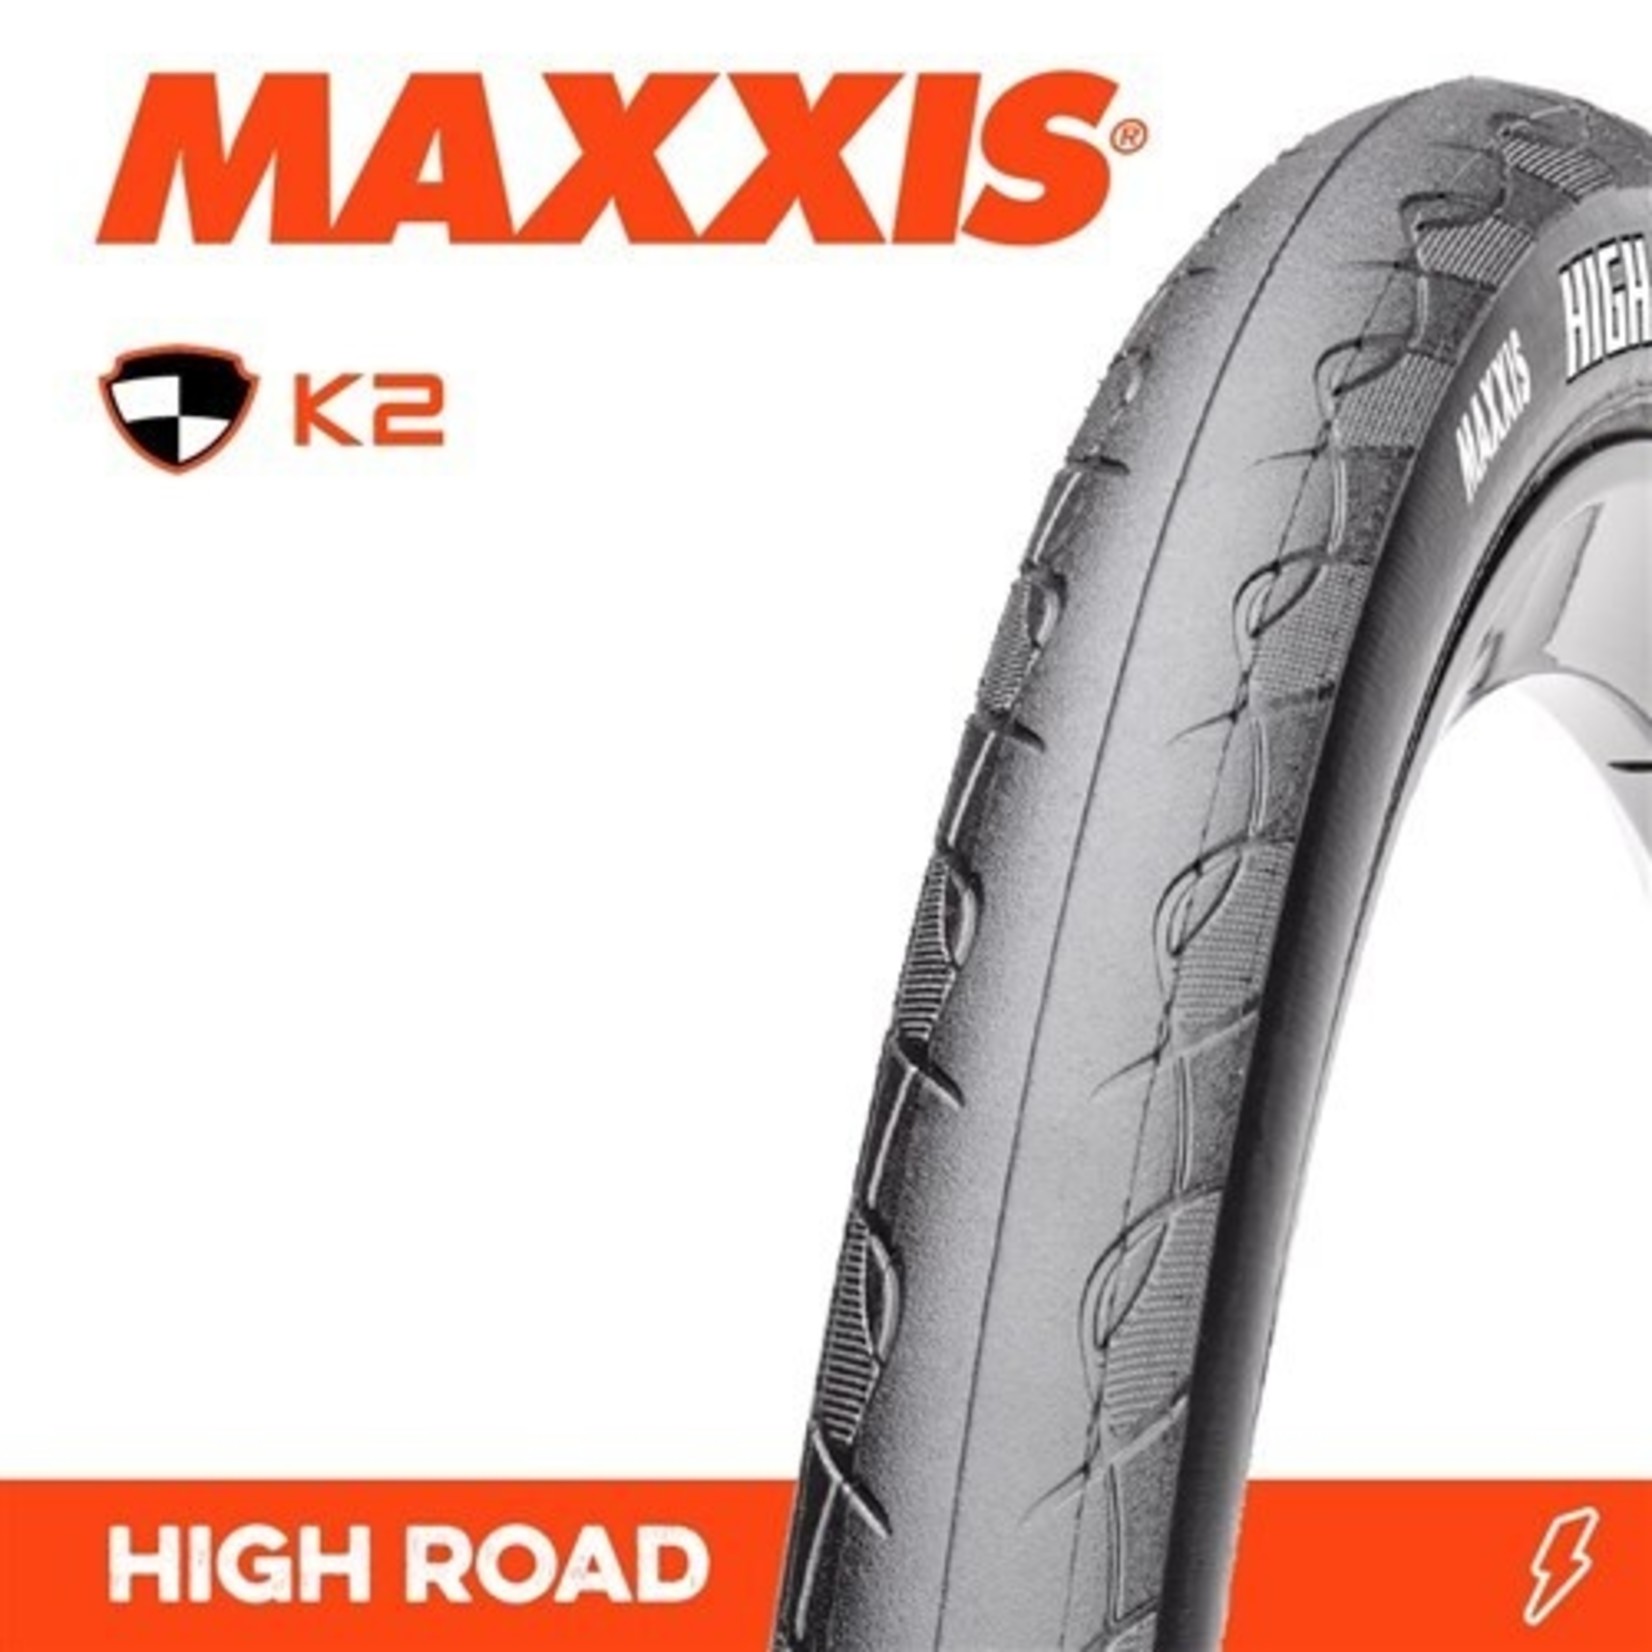 Maxxis Maxxis, Tyre High Road 700x28 120TPI K2 HYPR Folding